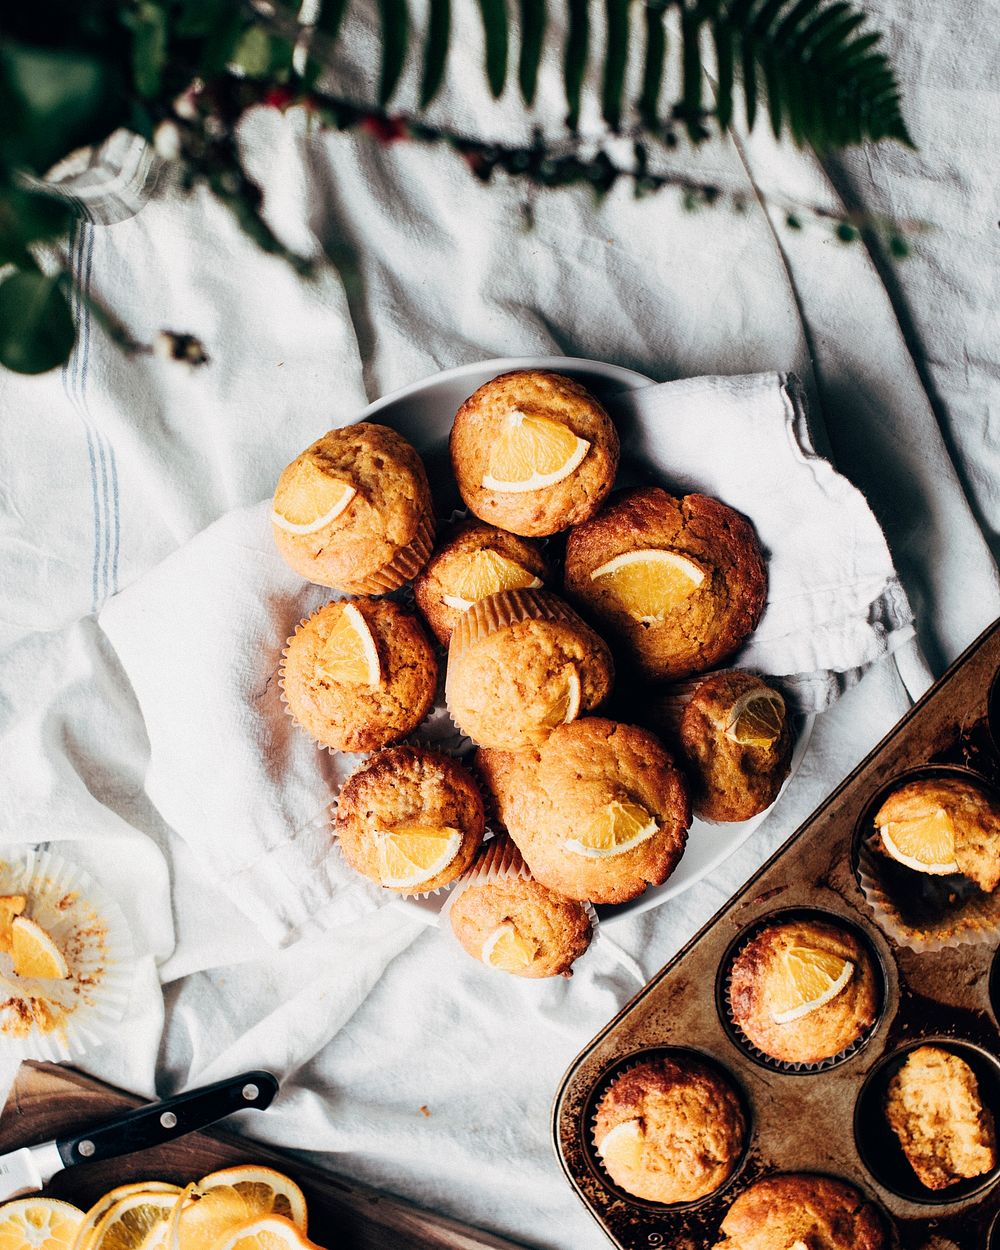 Basket of freshly baked orange muffins. Original public domain image from Wikimedia Commons